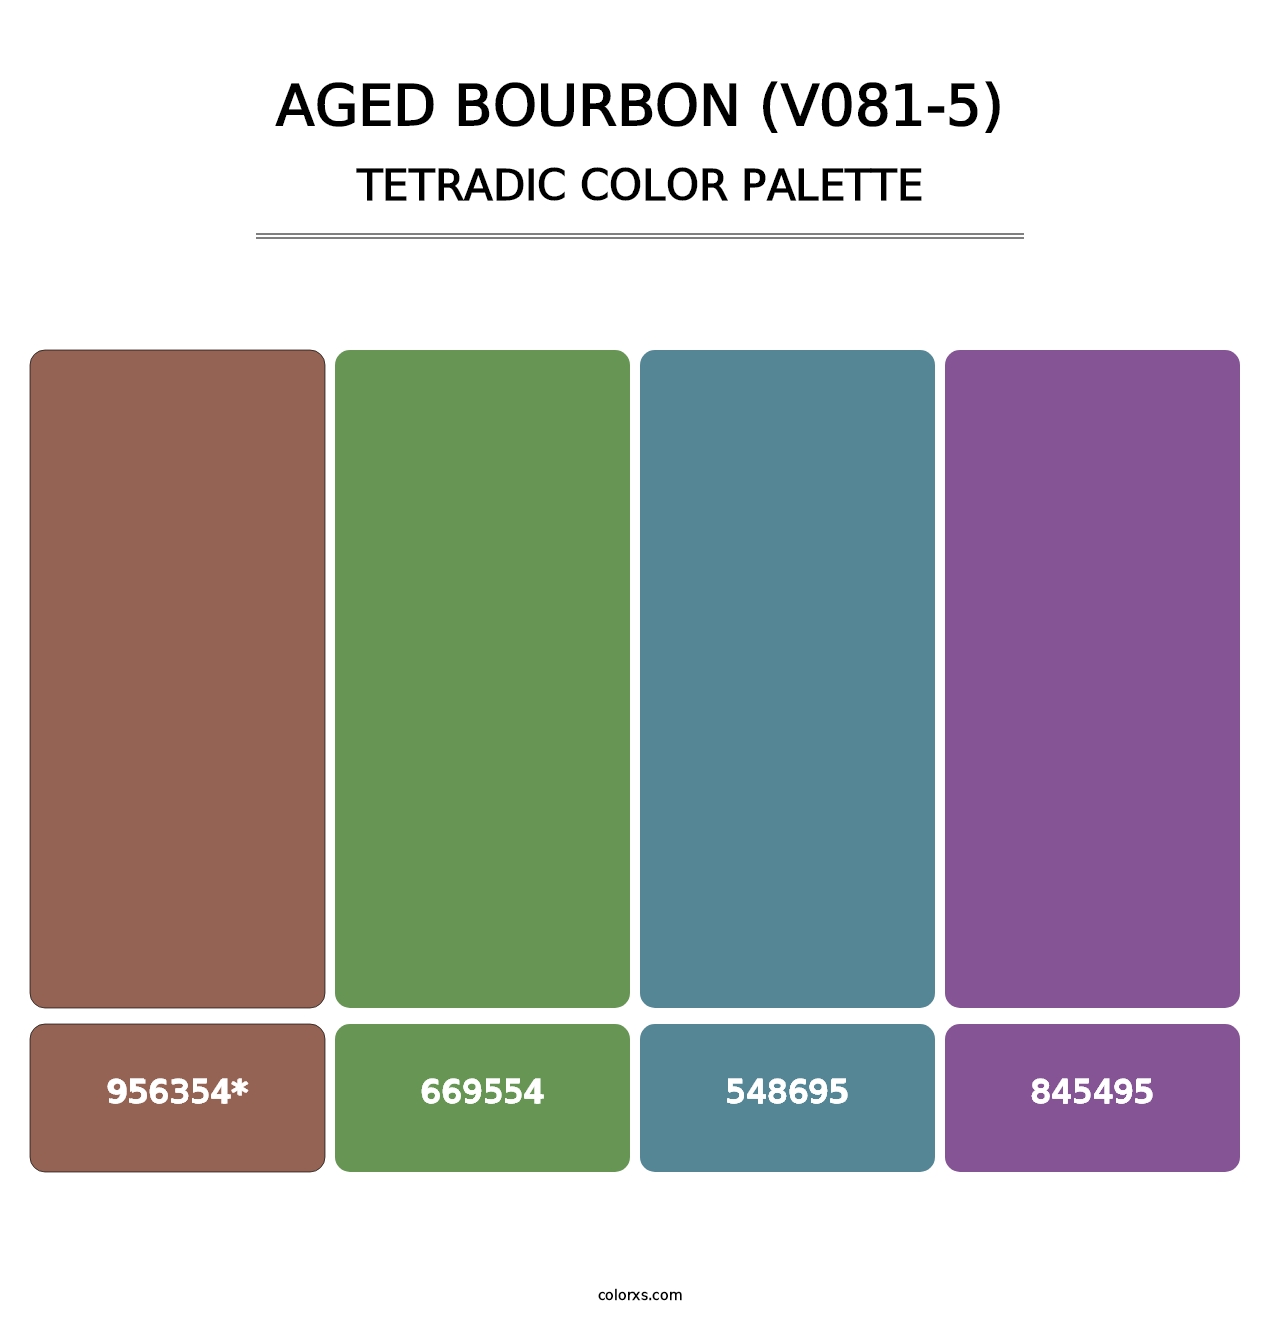 Aged Bourbon (V081-5) - Tetradic Color Palette